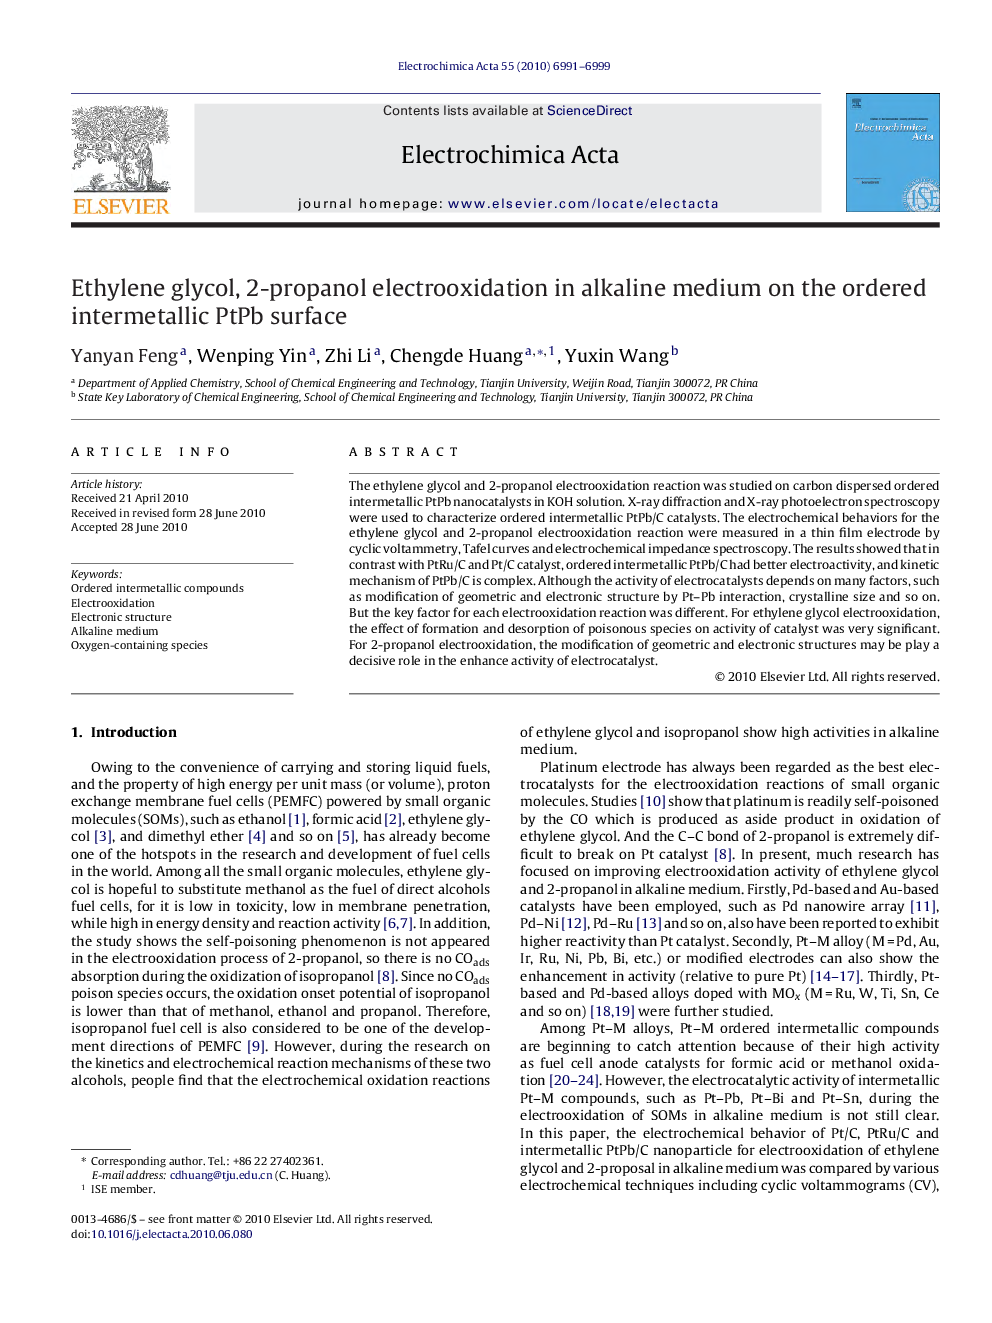 Ethylene glycol, 2-propanol electrooxidation in alkaline medium on the ordered intermetallic PtPb surface